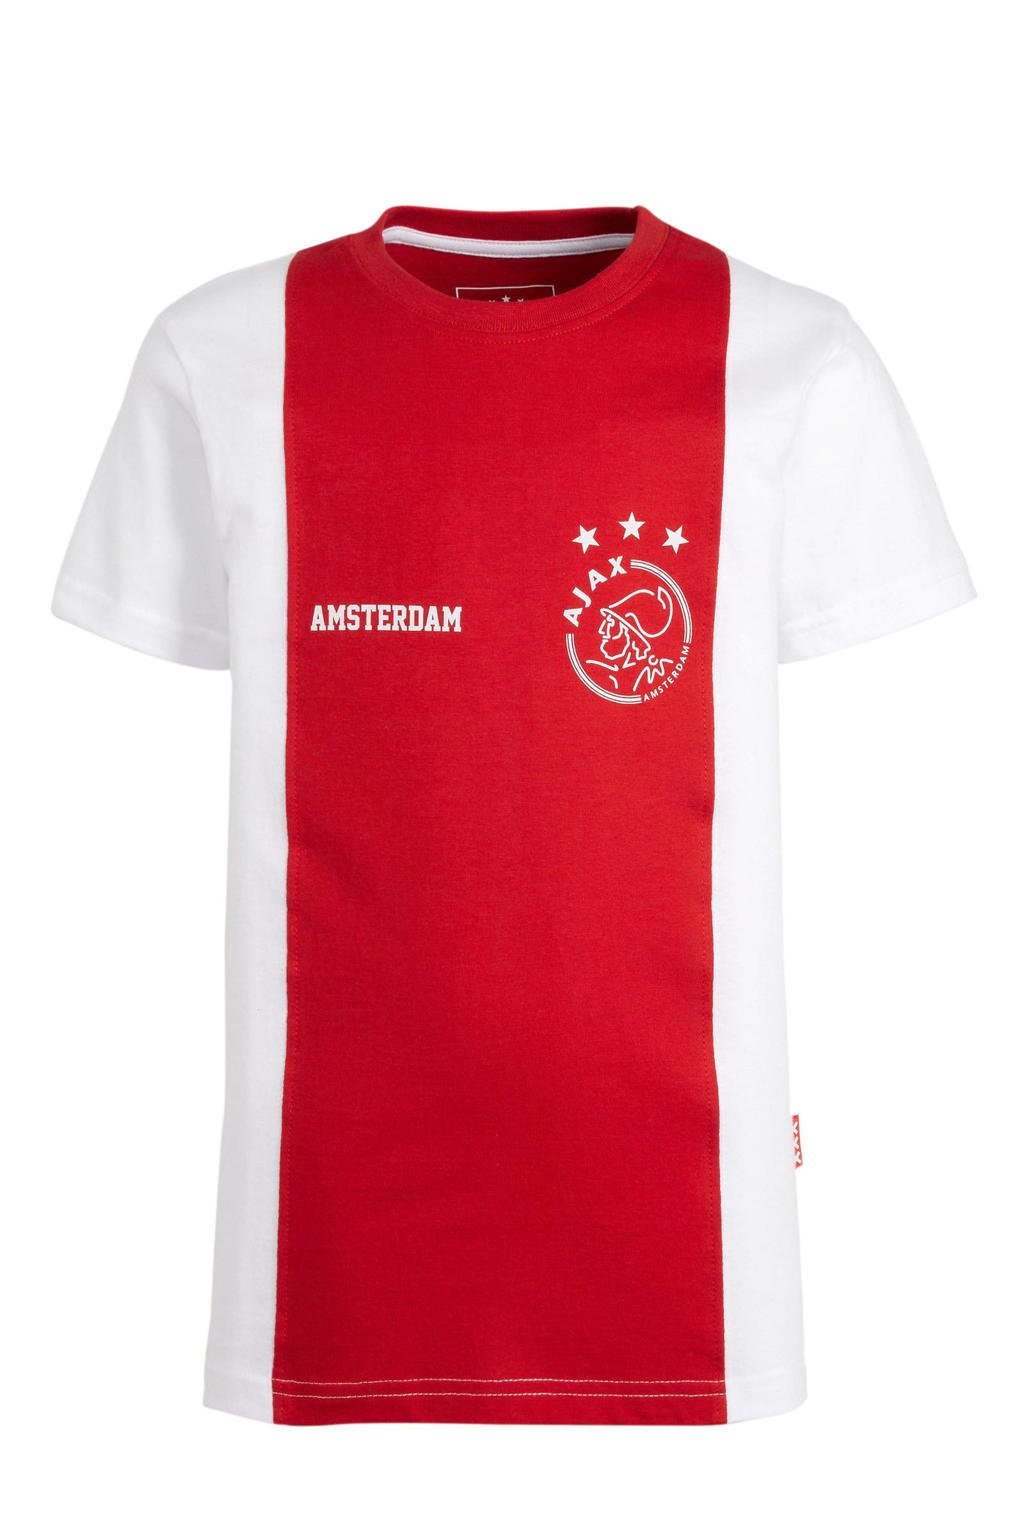 Ajax unisex Ajax T-shirt logo Amsterdam rood/wit